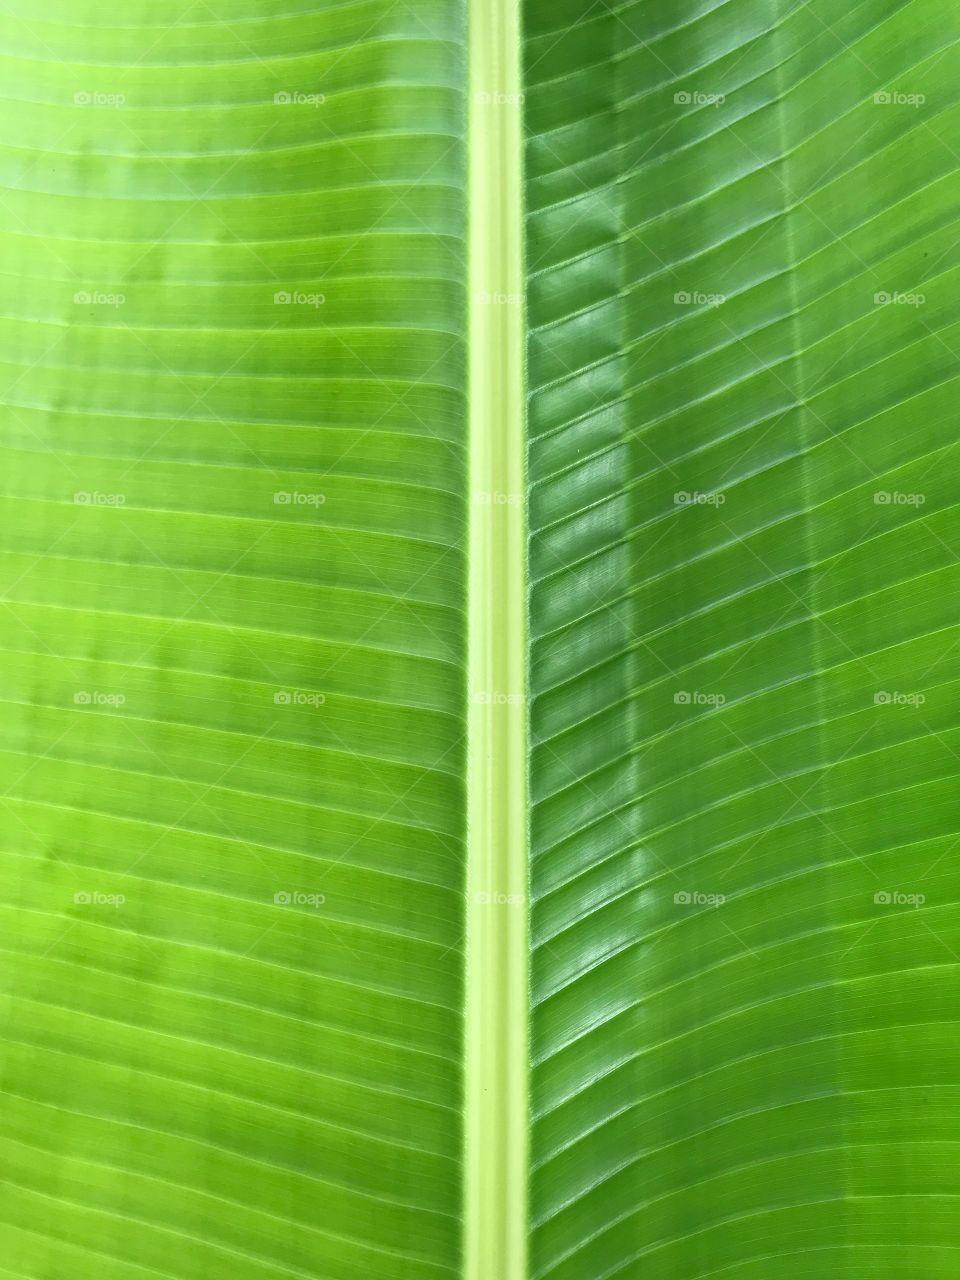 Close up of green banana leaf.